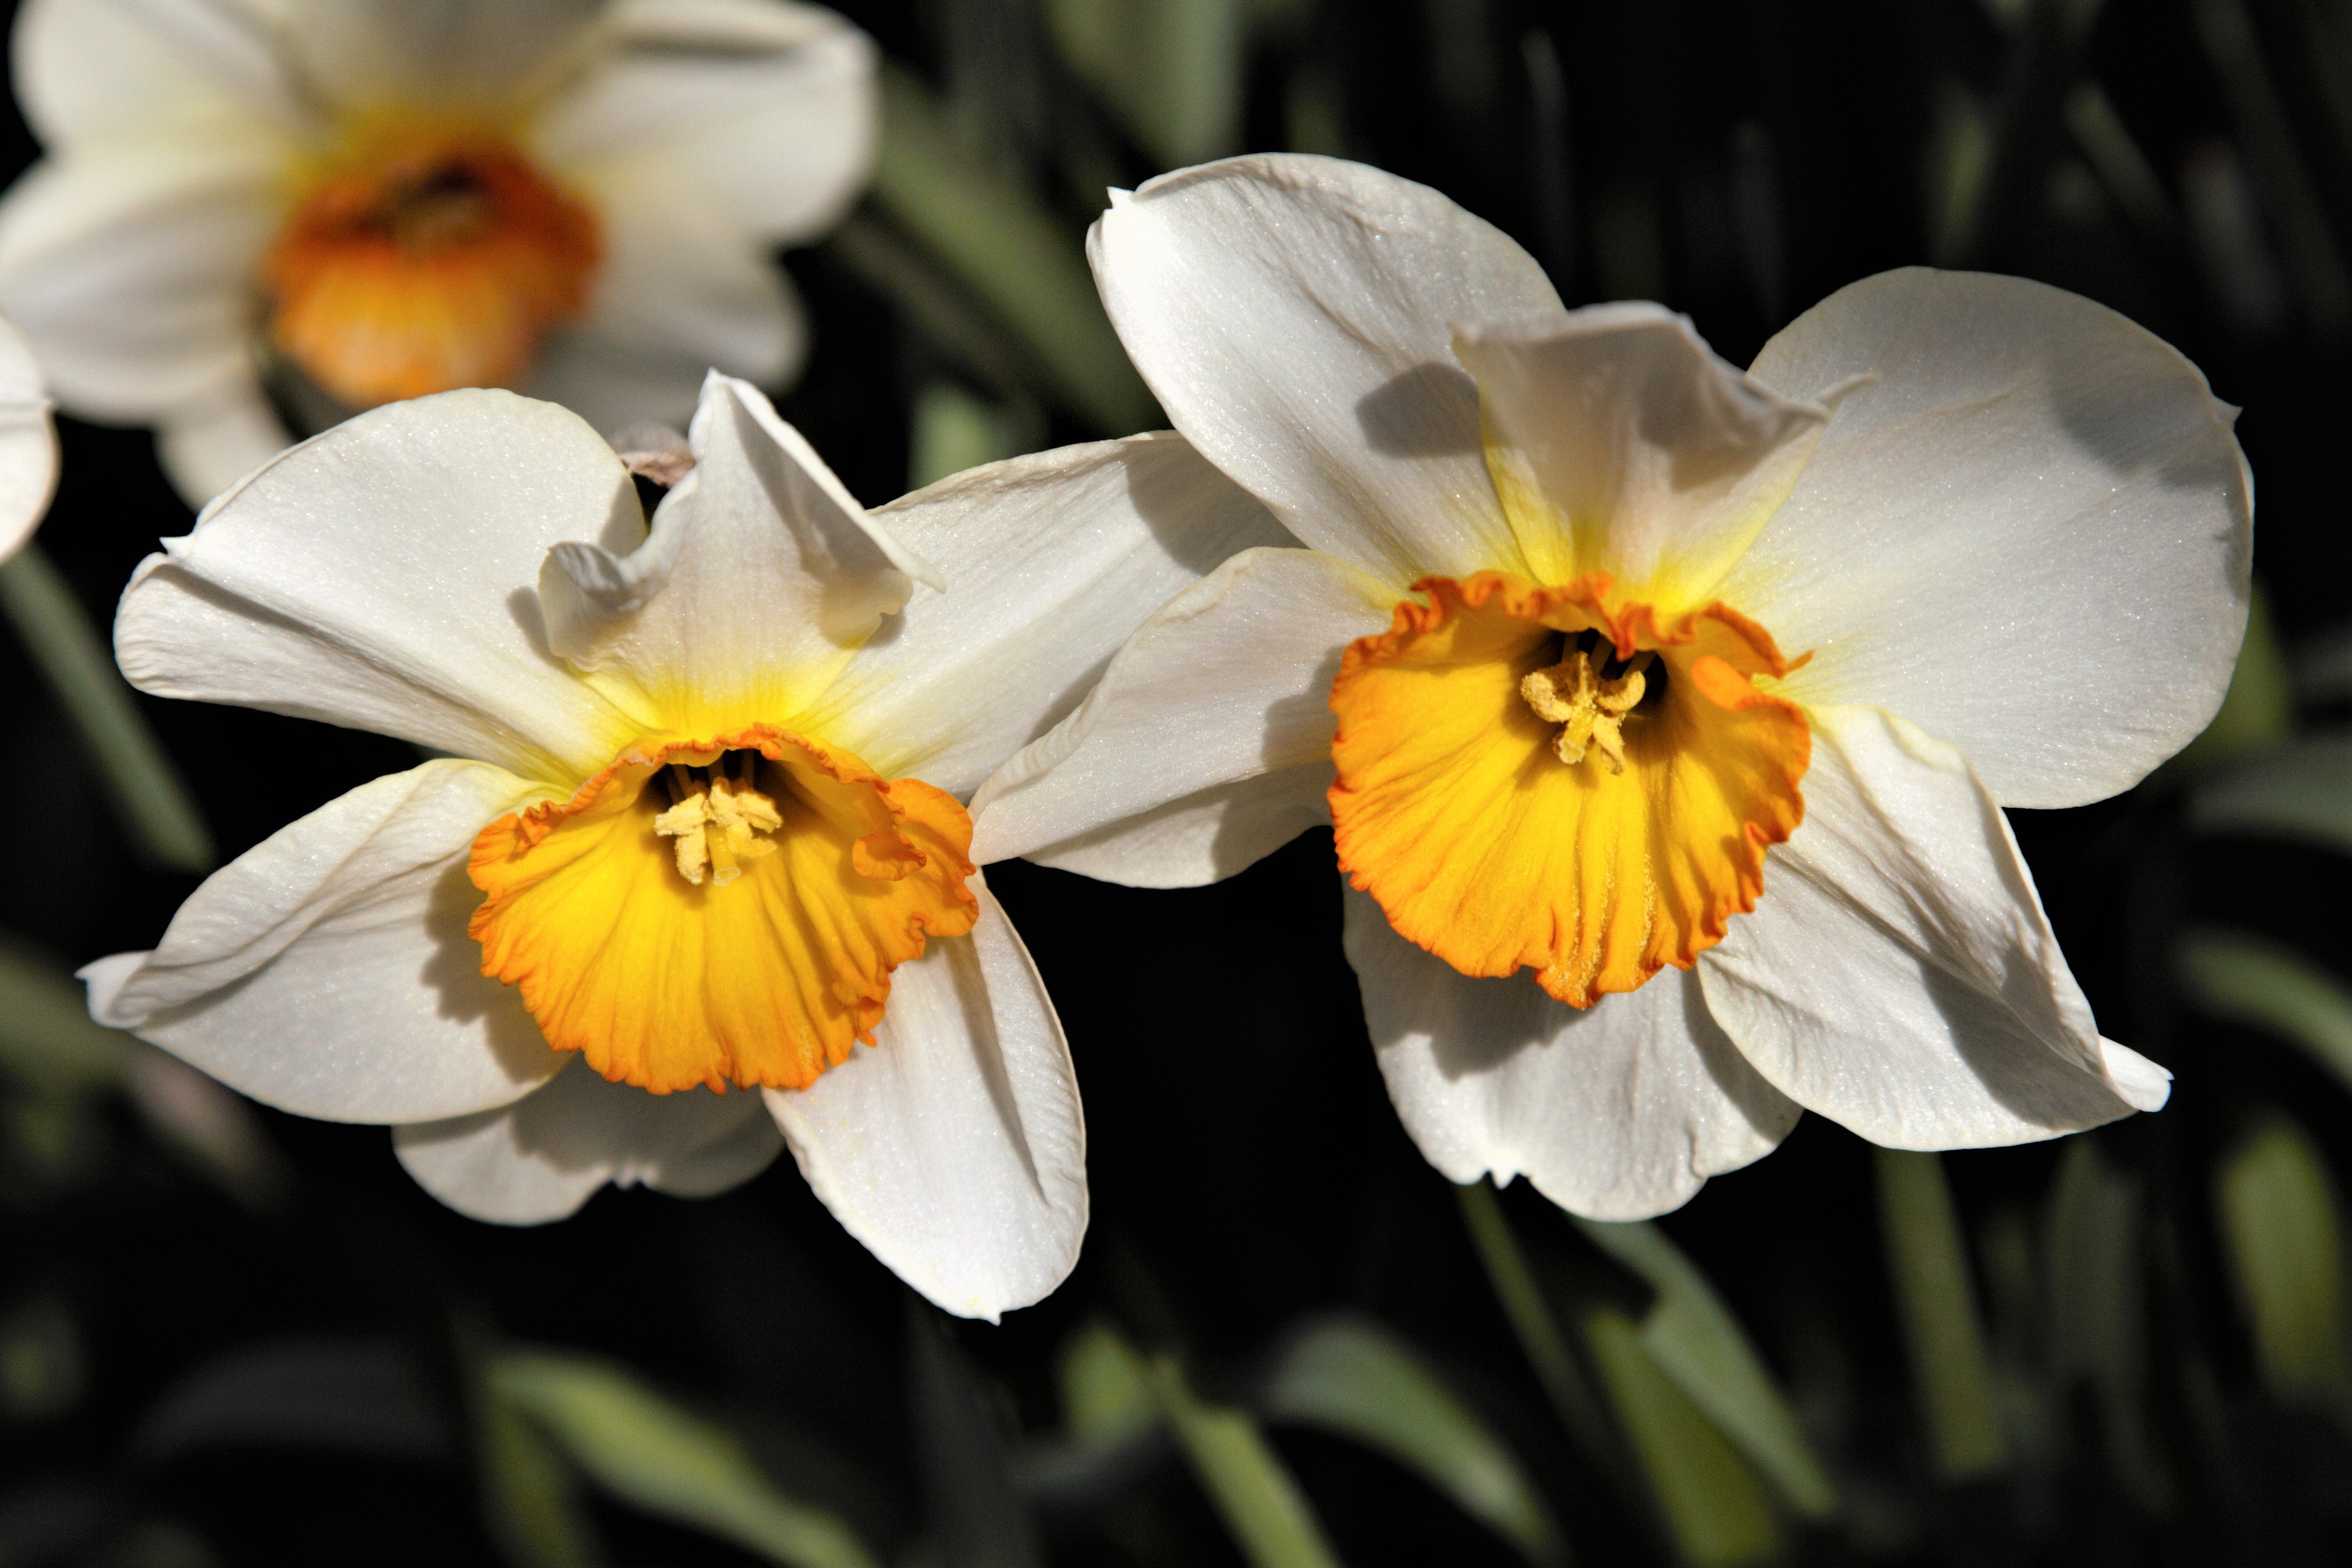 Vibrant Daffodil: Barret Browning variety, symbolizing hope and renewal.